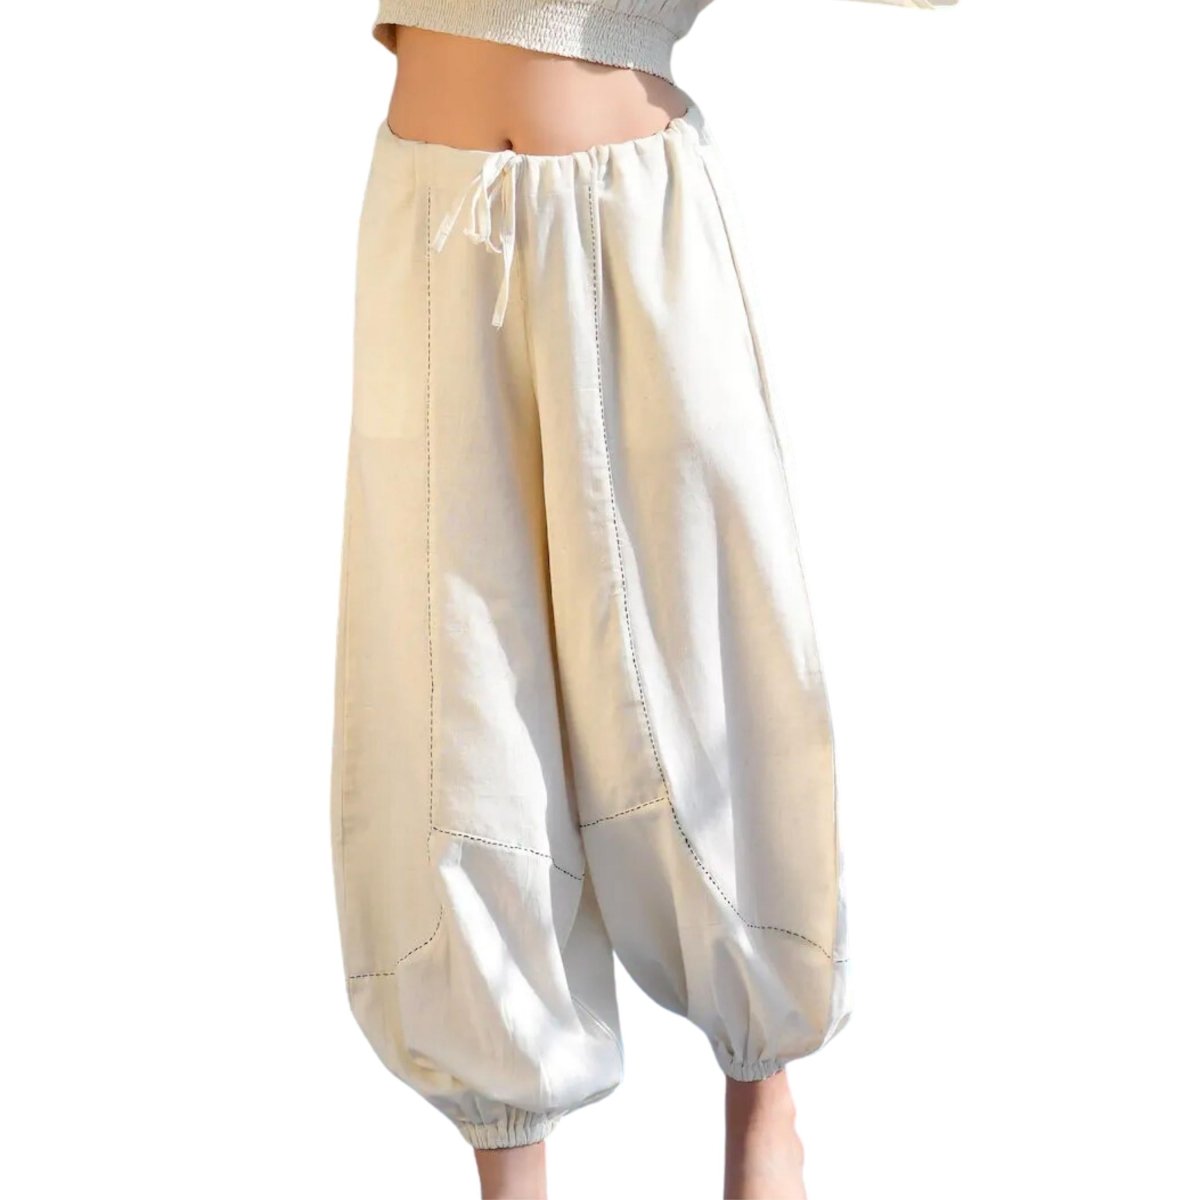 Buy Retro Wide Leg Harem Pants Cotton Linen Baggy Long Pants #TX4,Army  Green,XL at Amazon.in